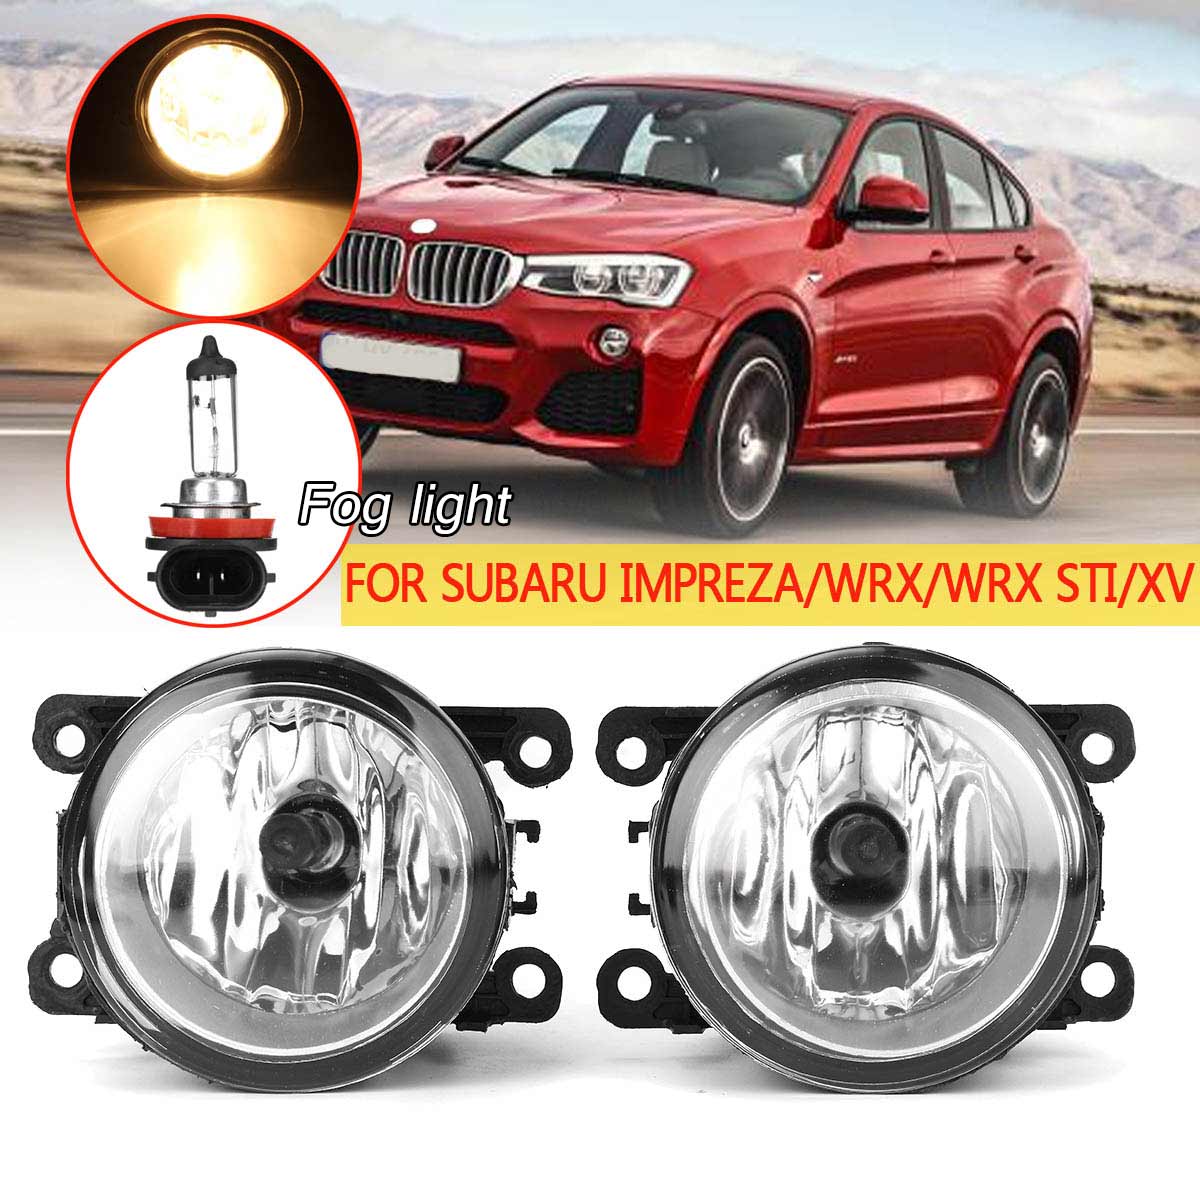 2Pcs-Car-Front-Fog-Lights-Clear-Lens-H11-Bulbs-With-Wiring-Kit-For-Subaru-ImprezaWRXWRX-STIXV-1677889